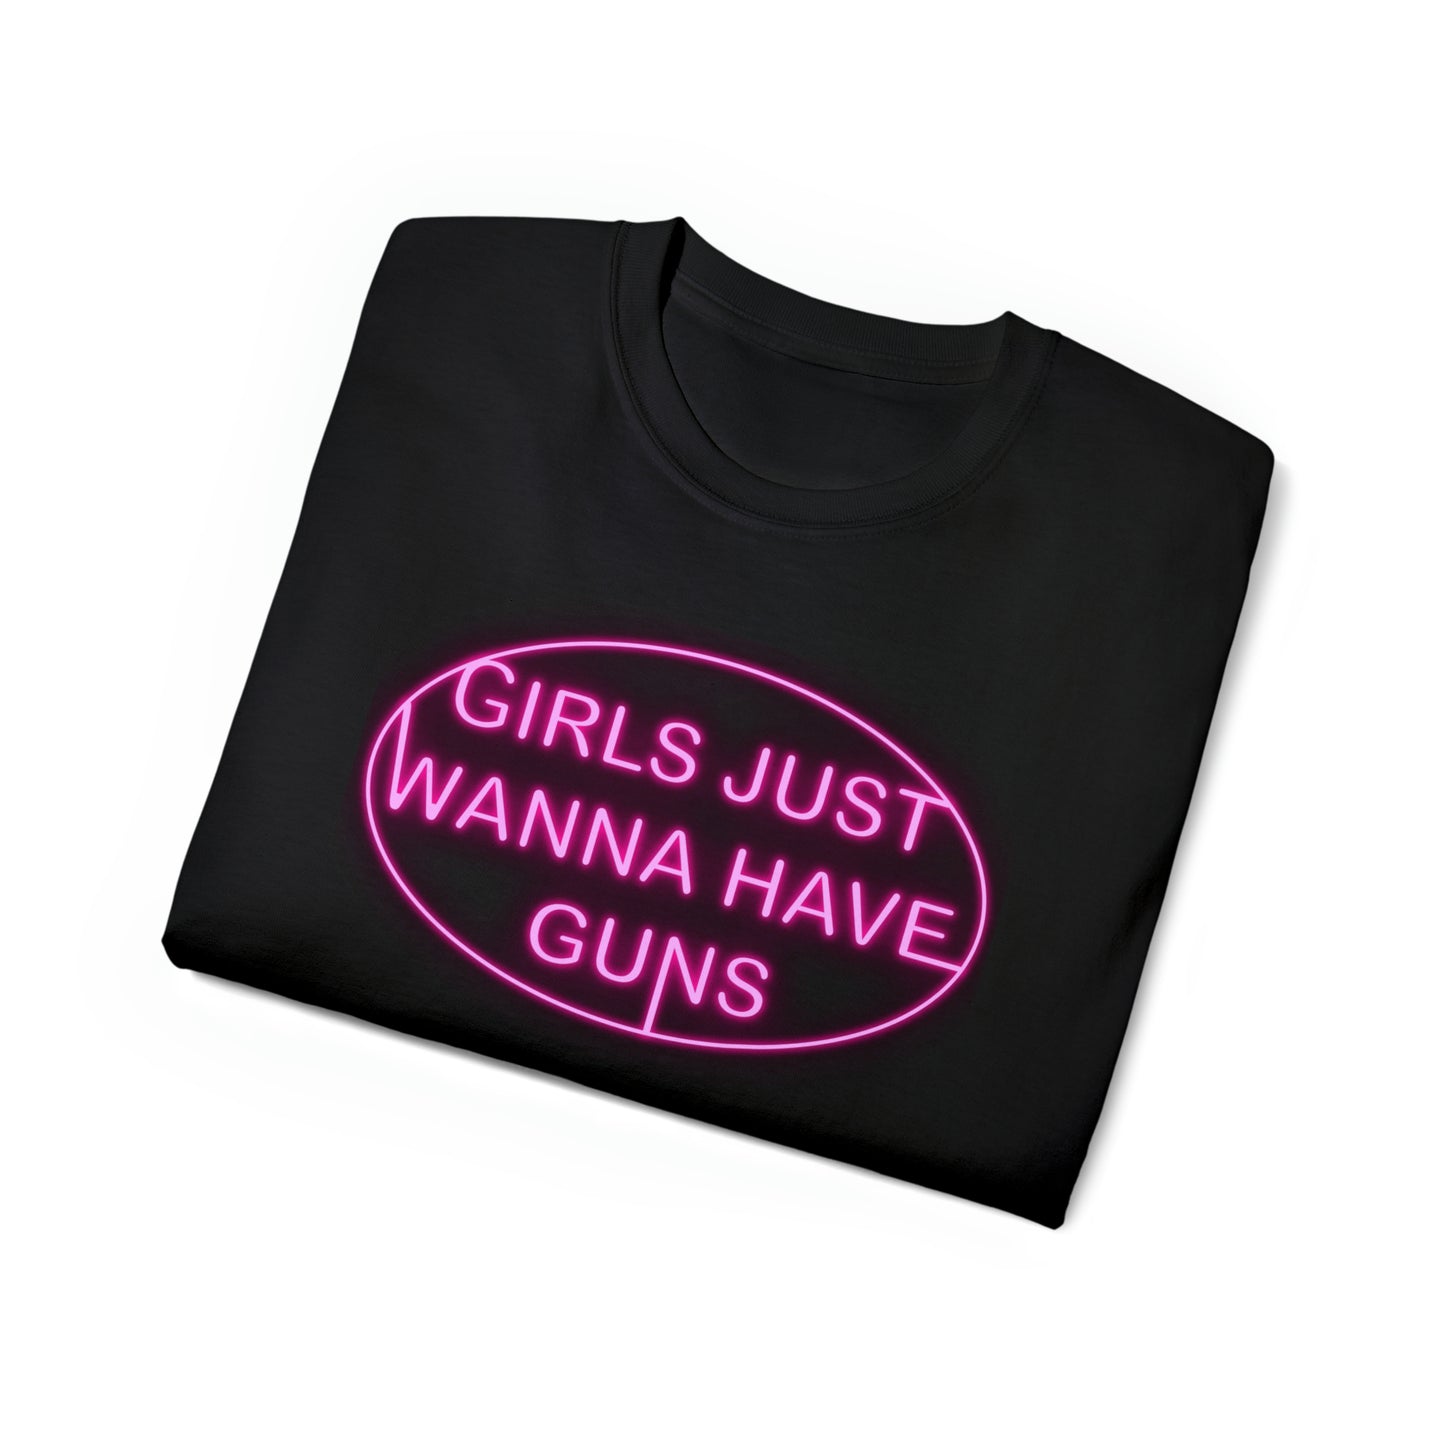 Girls Just Wanna have Guns